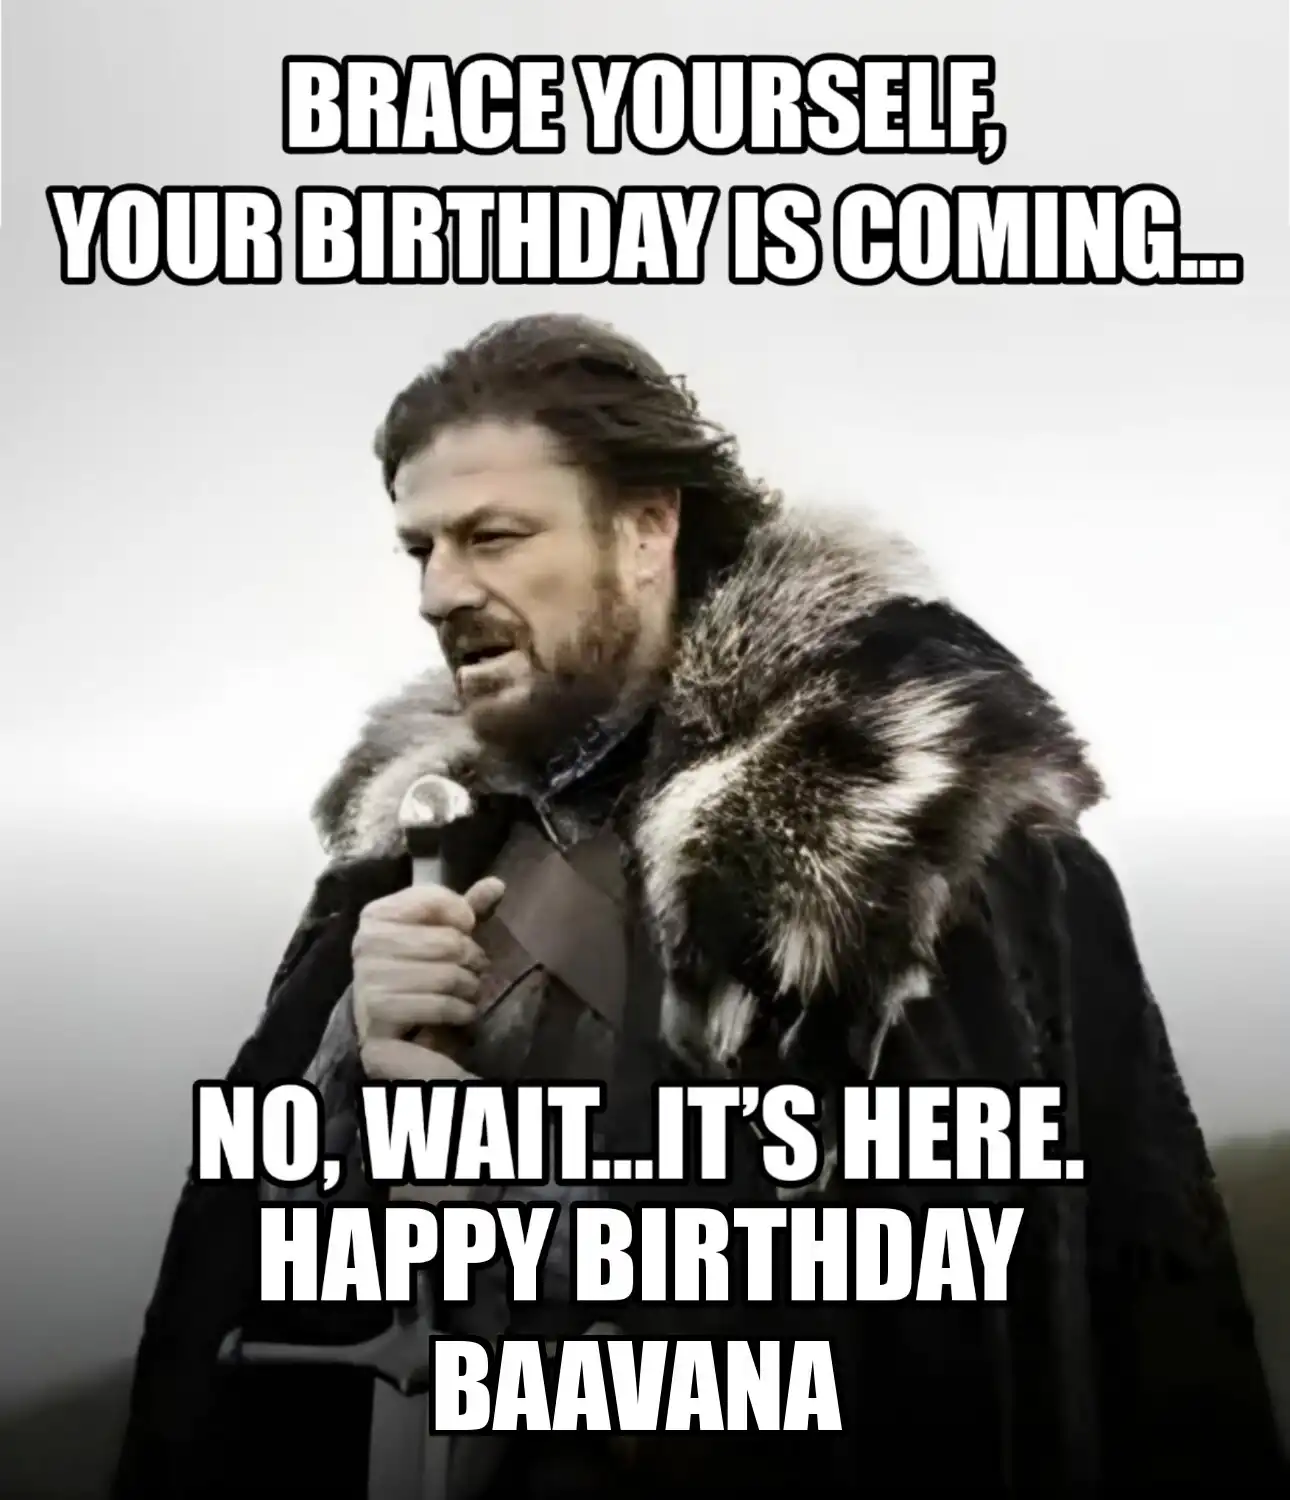 Happy Birthday Baavana Brace Yourself Your Birthday Is Coming Meme